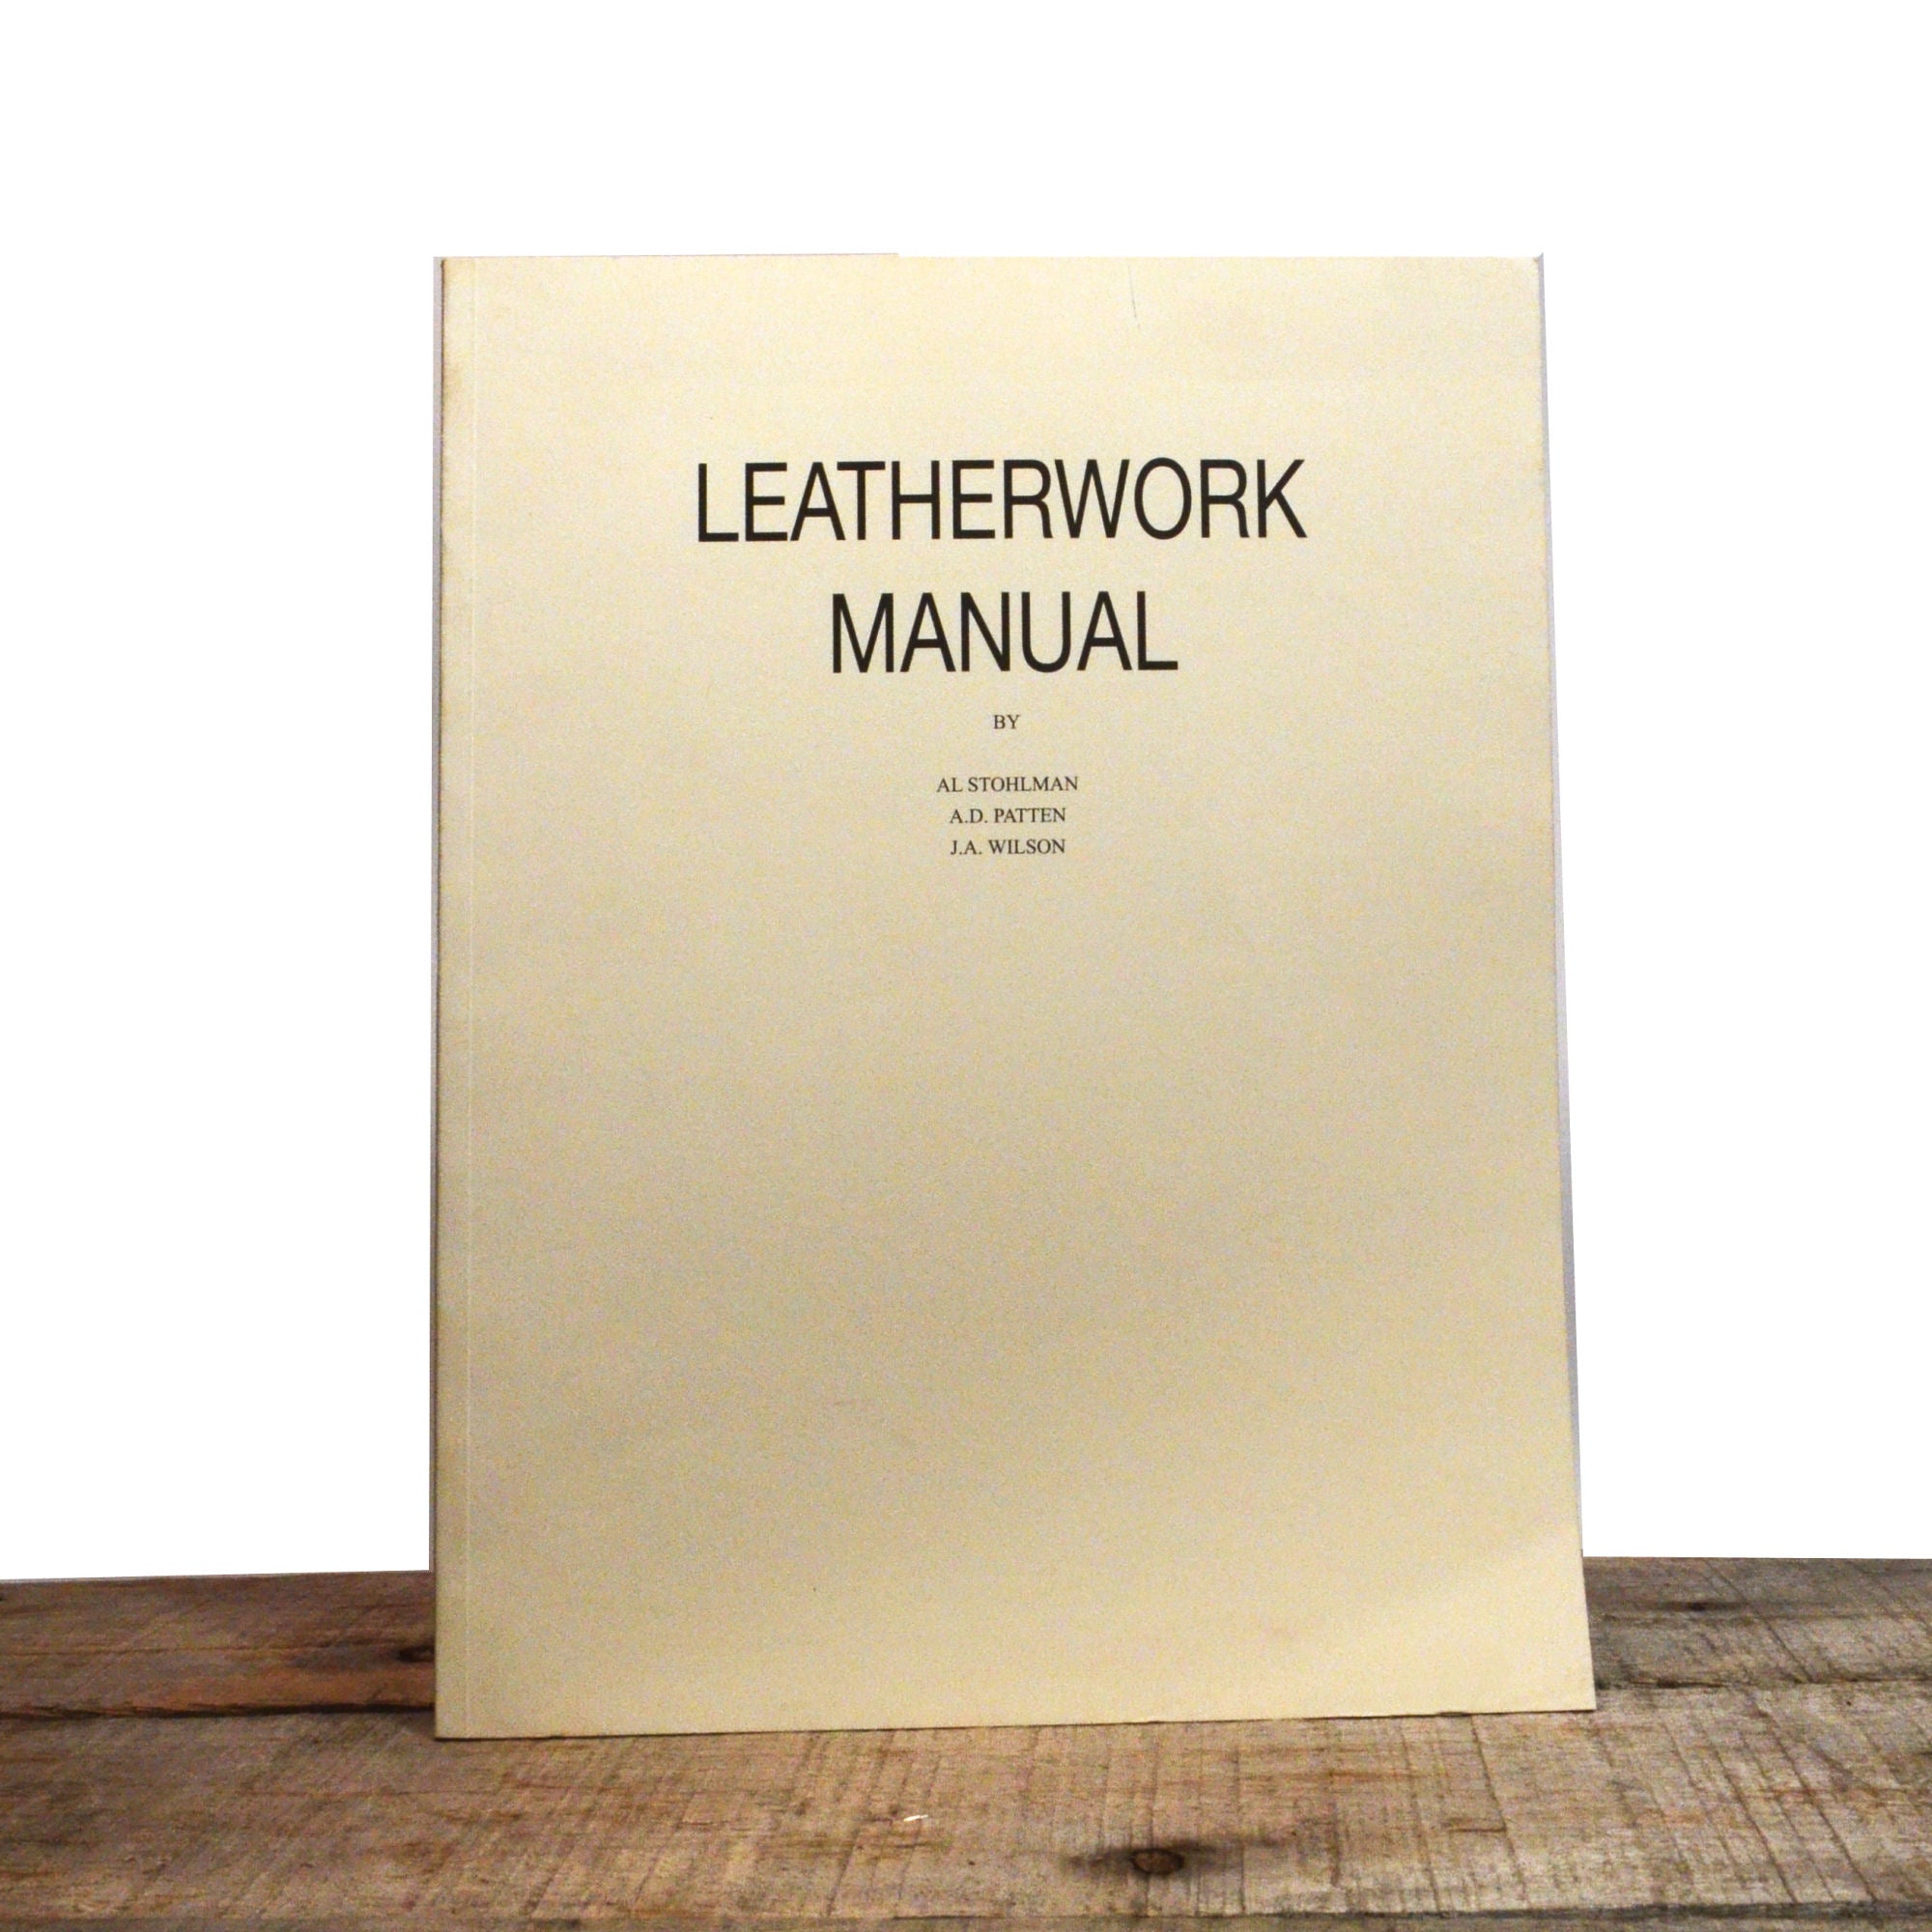 The Leatherwork Manual from Identity Leathercraft